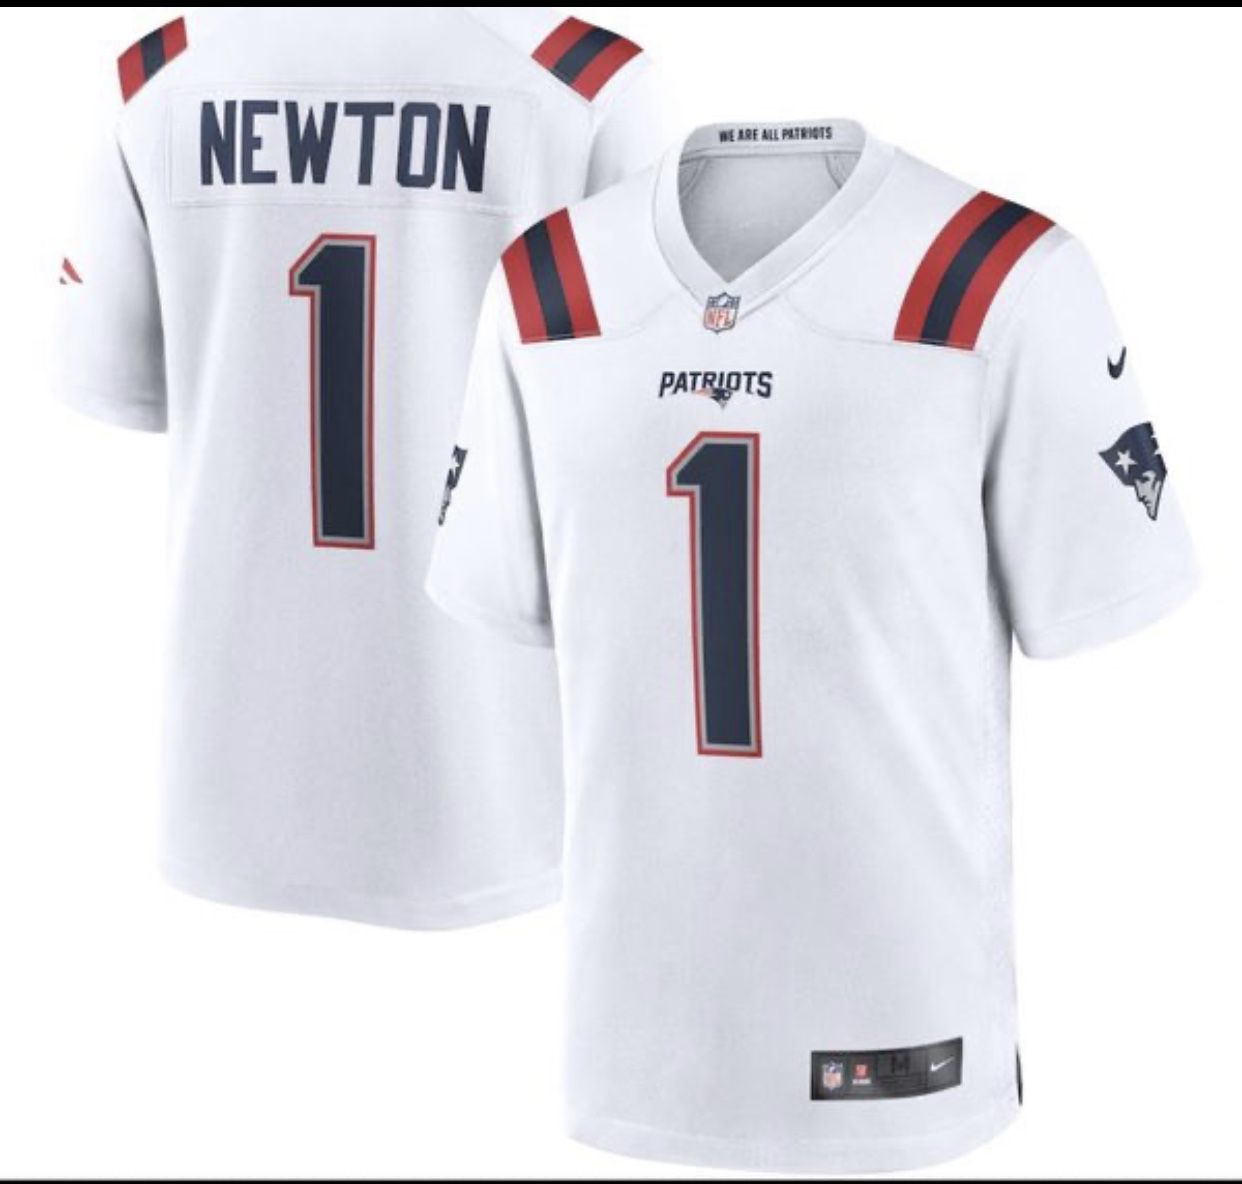 New England Patriots #1 Newton Jersey